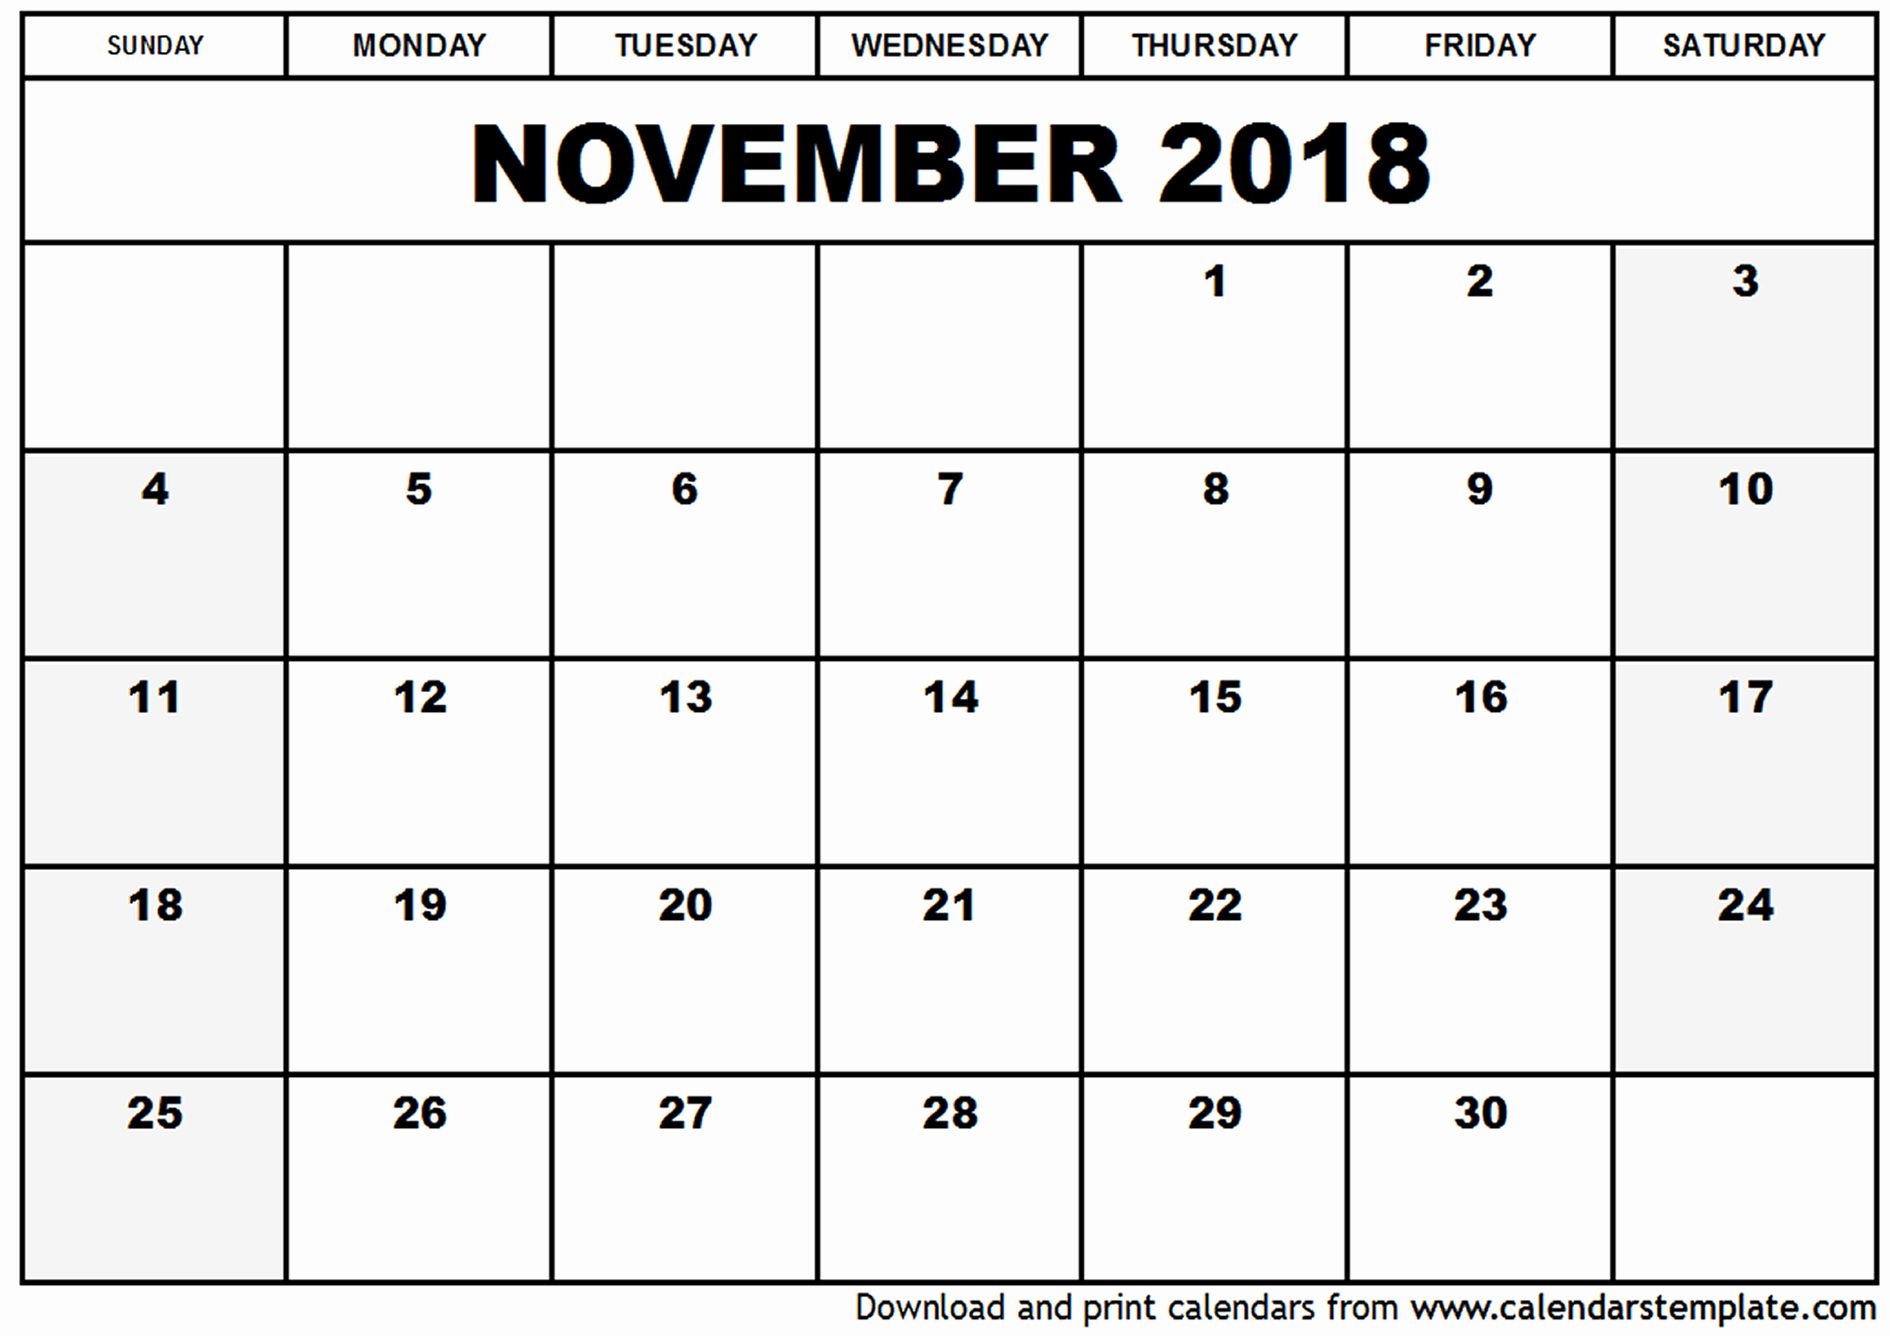 november-2018-calendar